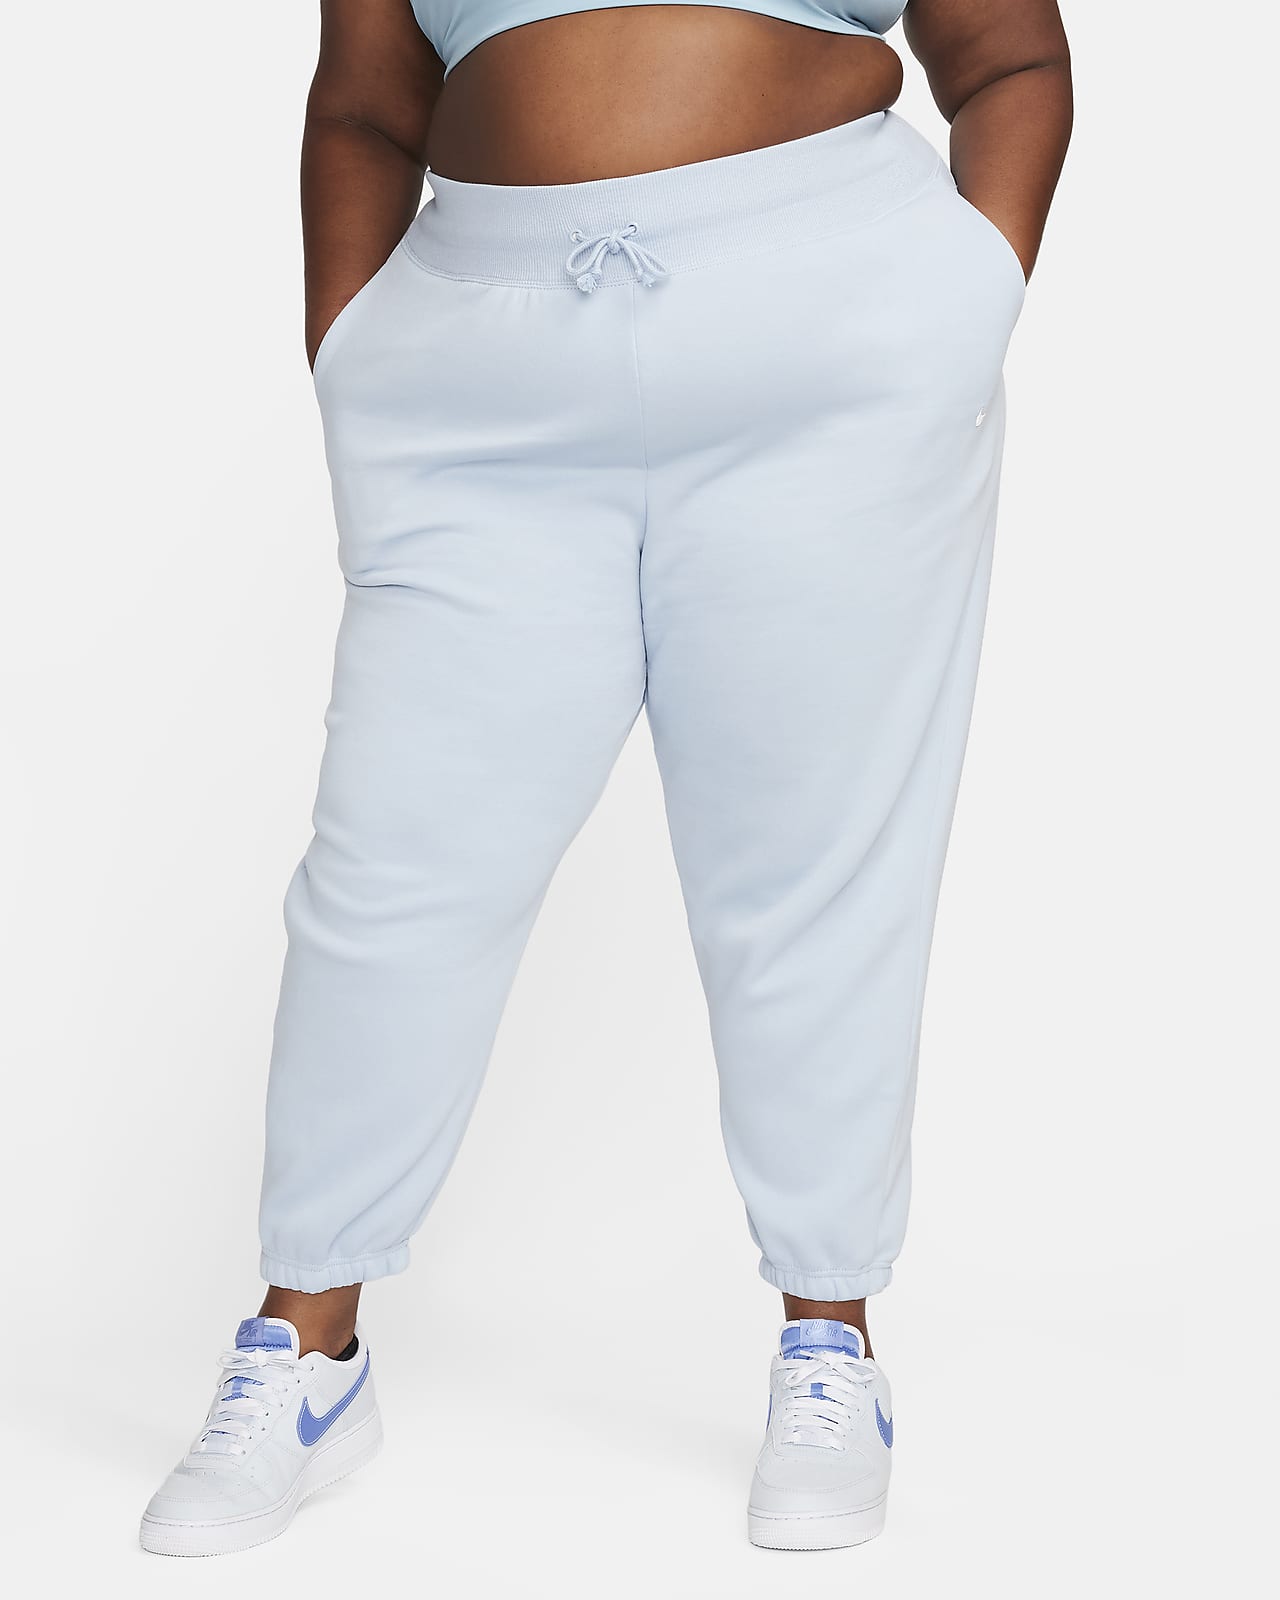 NIKE Nike DRI-FIT PARK 20 - Tracksuit Jacket + Jogging Pants - Women's -  royal blue/obsidian/obsidian/white - Private Sport Shop